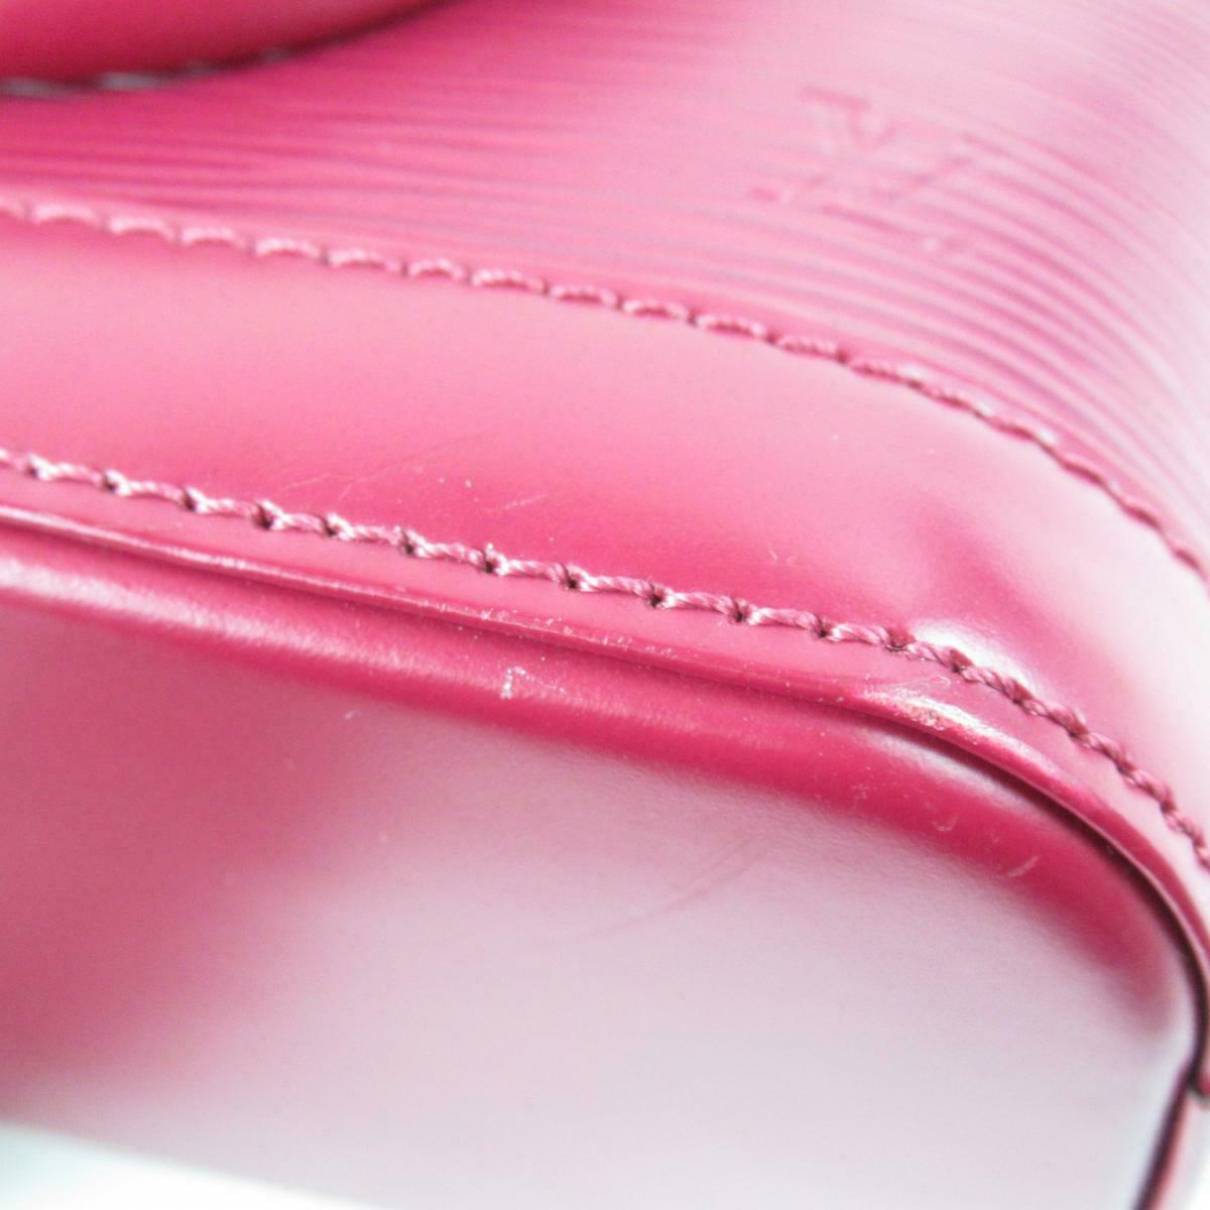 Louis Vuitton Alma Handbag EPI Leather PM Pink